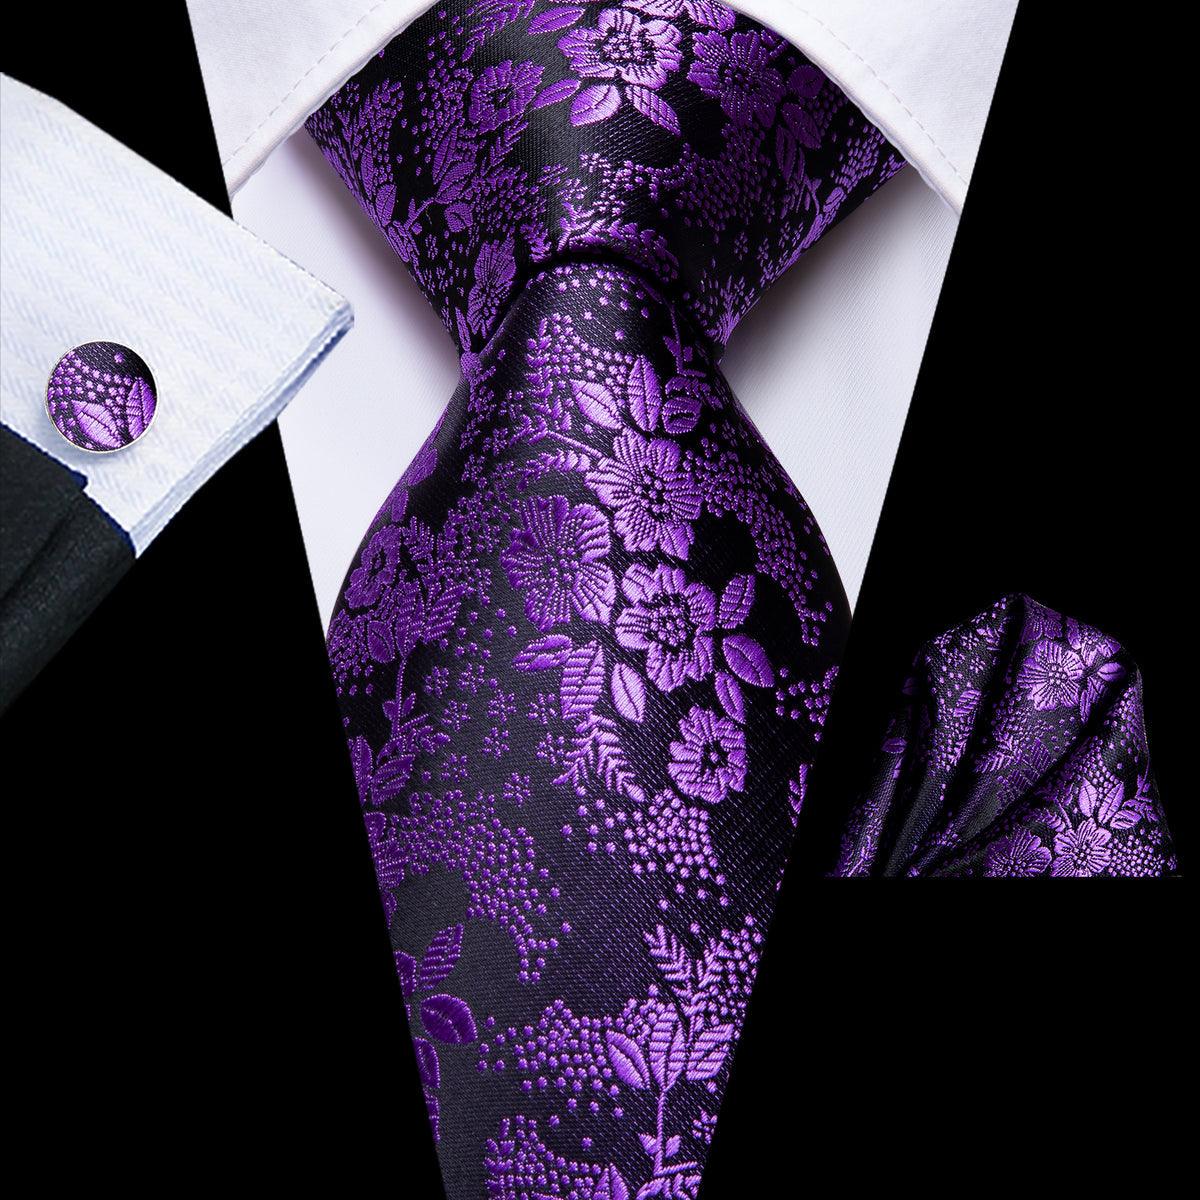 Purple Floral Silk Tie Pocket Square Set - STYLETIE